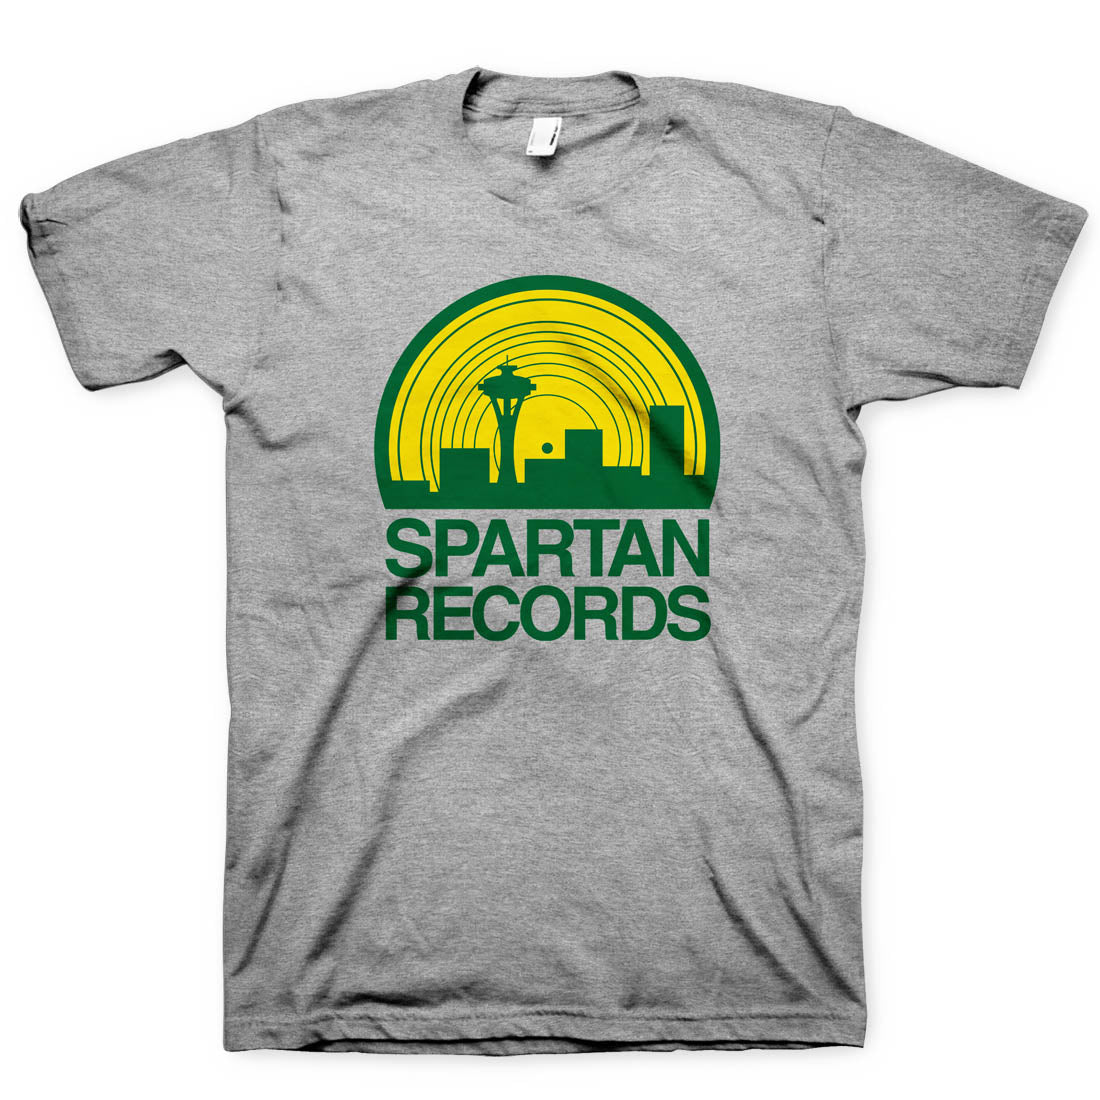 Spartan "Supersonics" T-Shirt